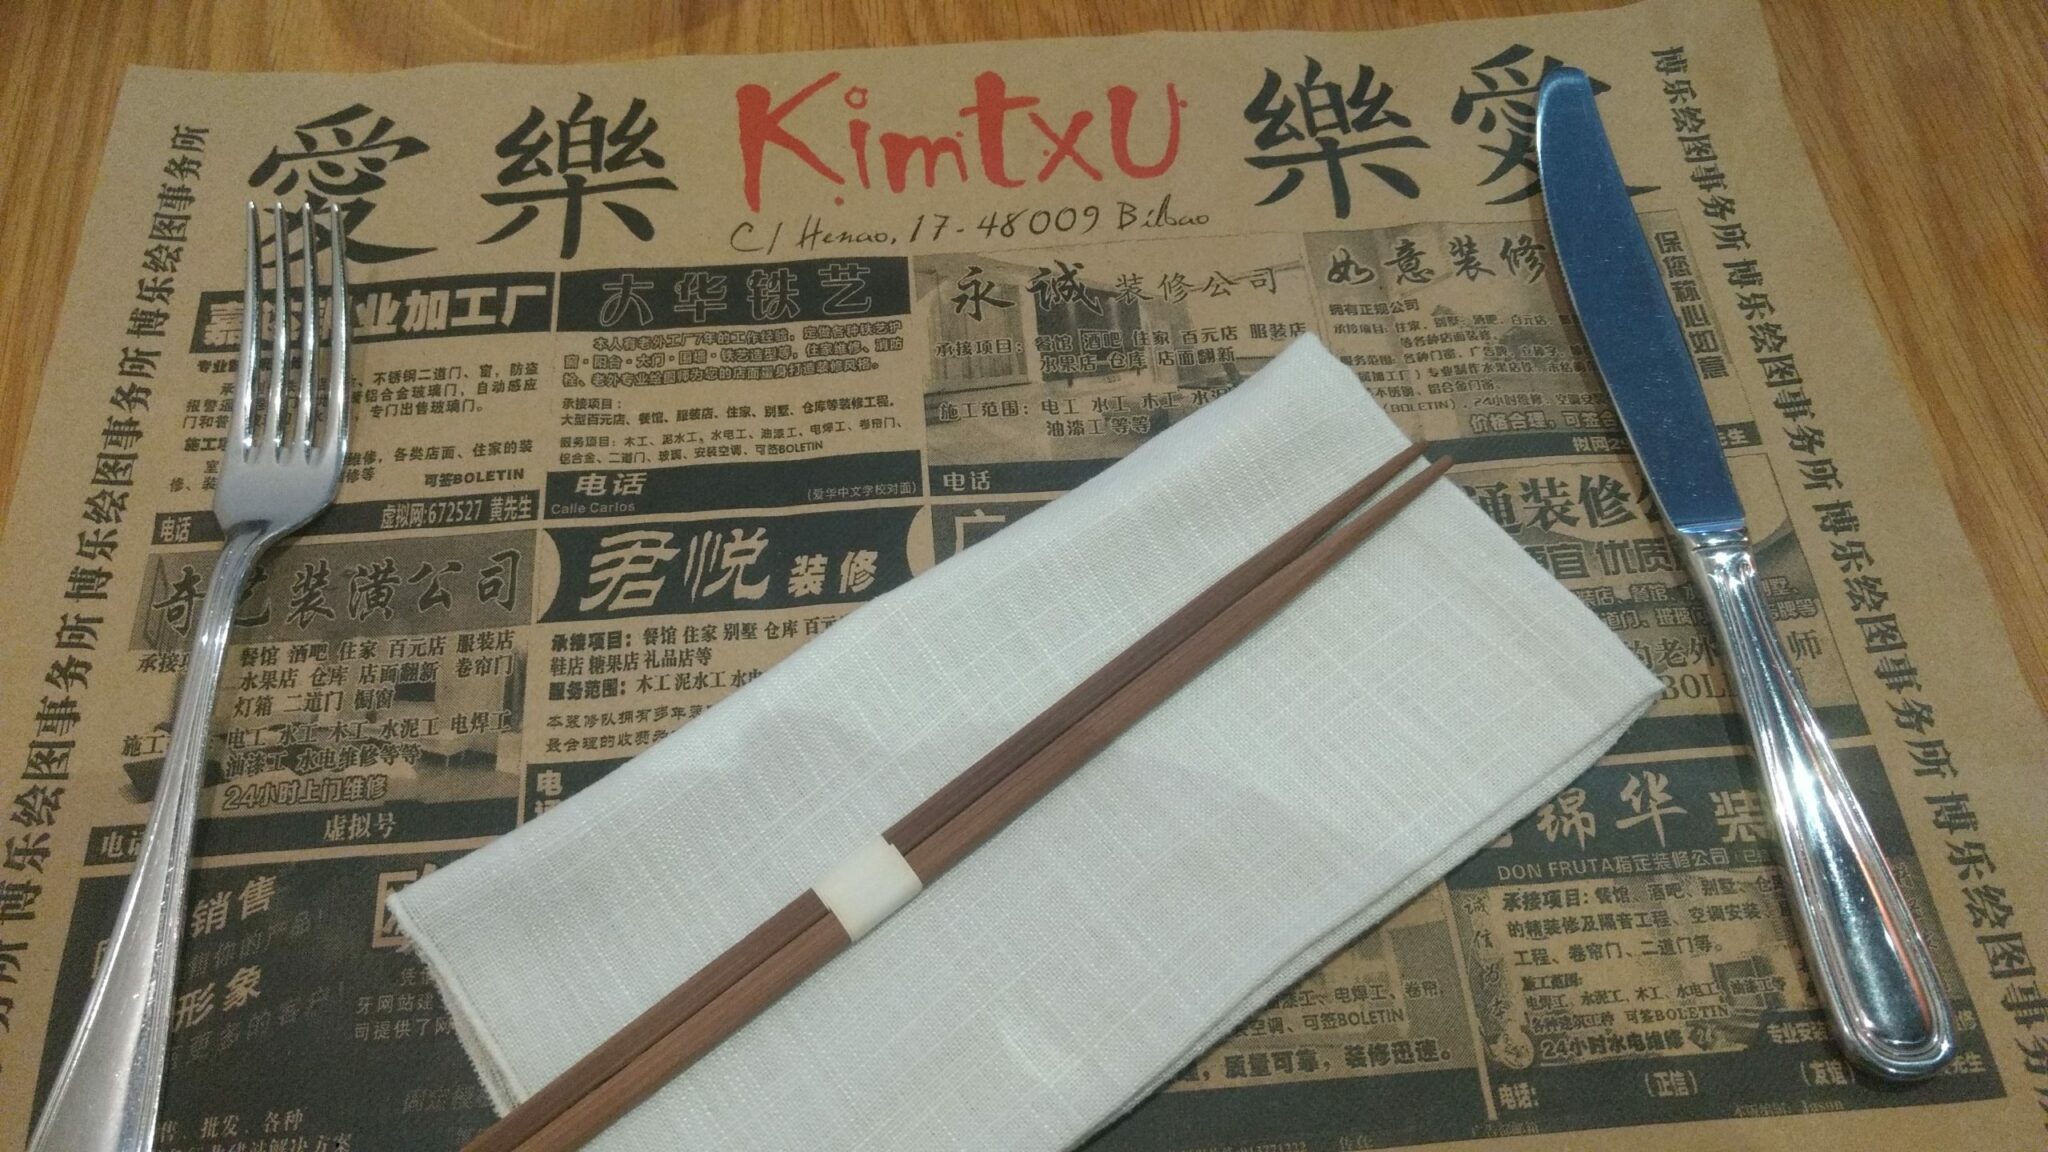 Restaurante Kimtxu